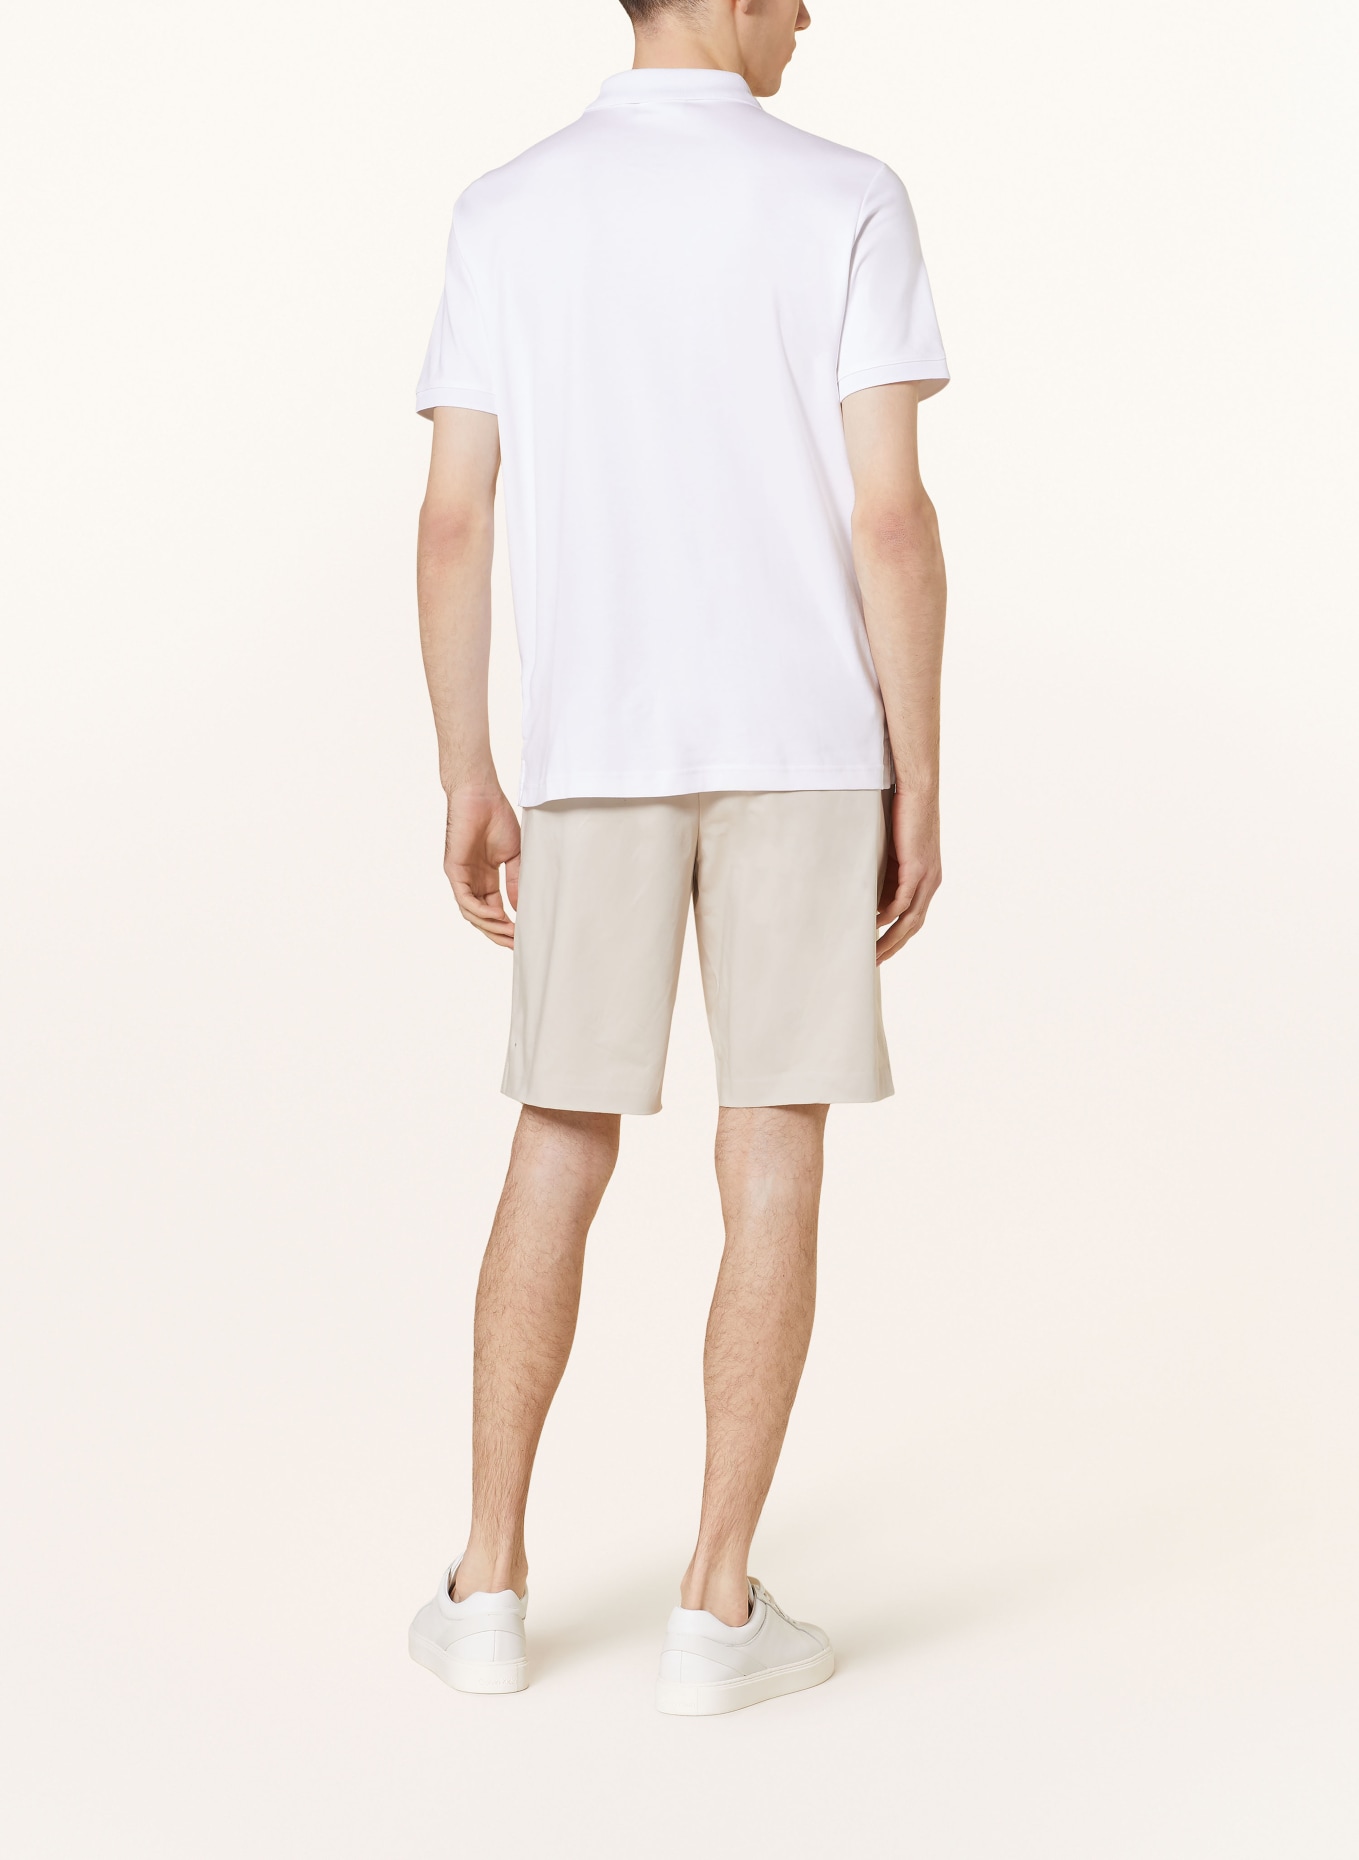 Calvin Klein Jersey-Poloshirt, Farbe: WEISS (Bild 3)